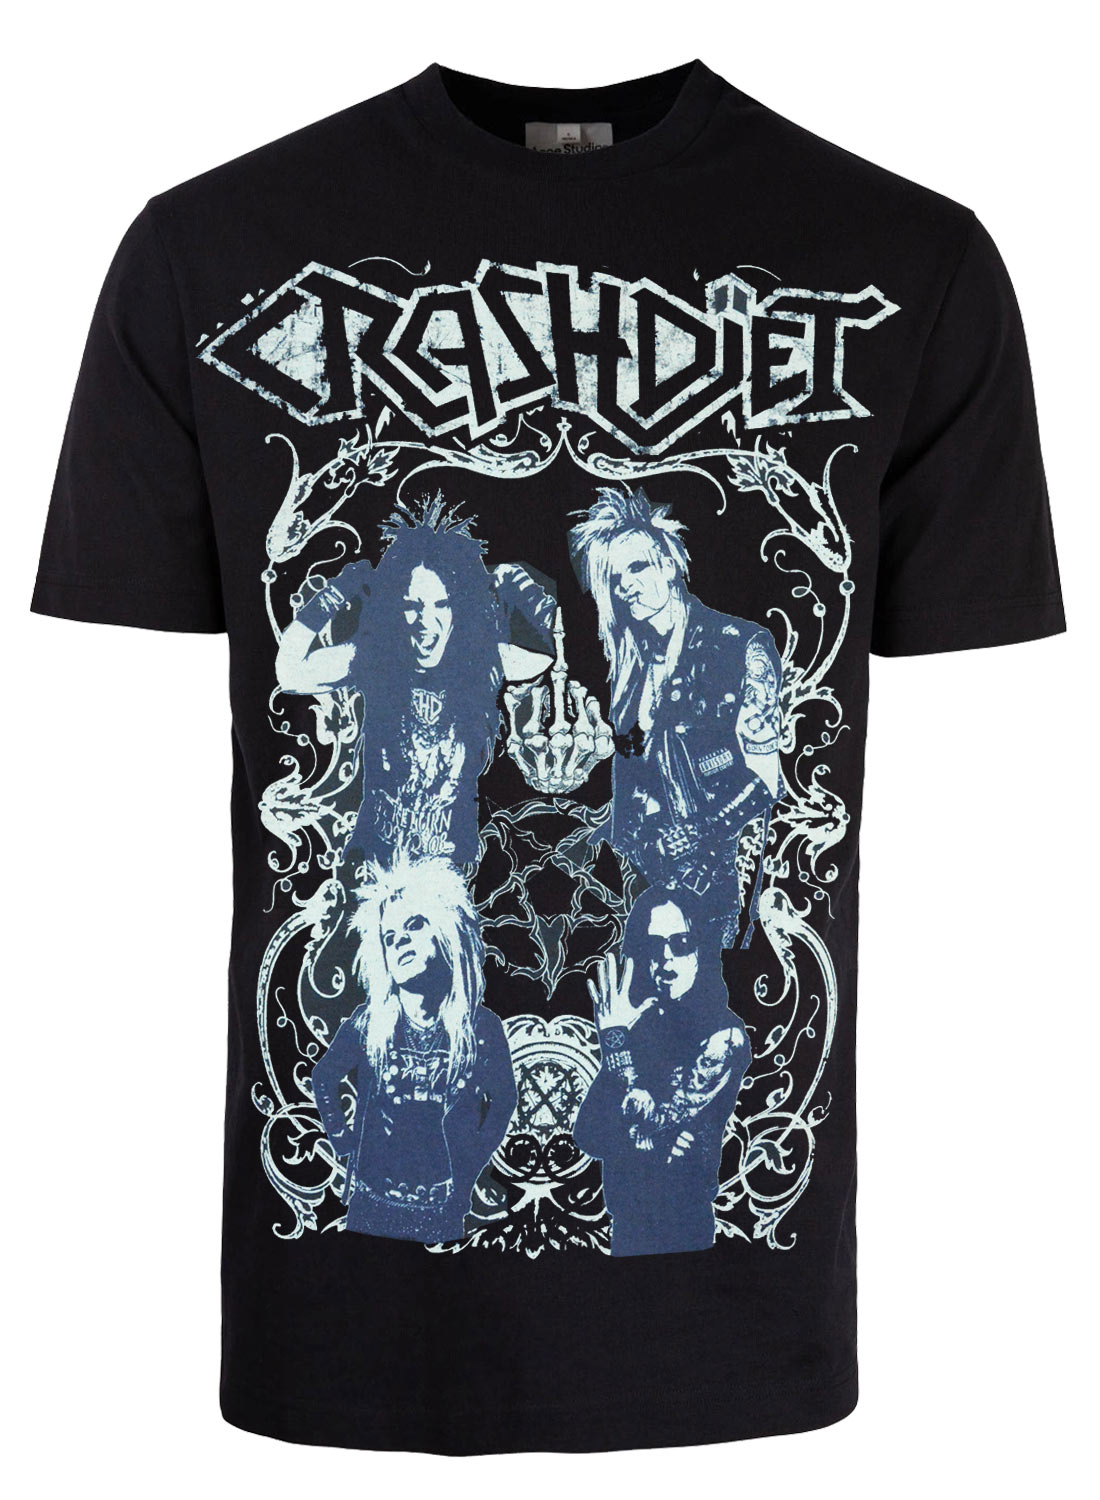 Crashdiet Group T-Shirt